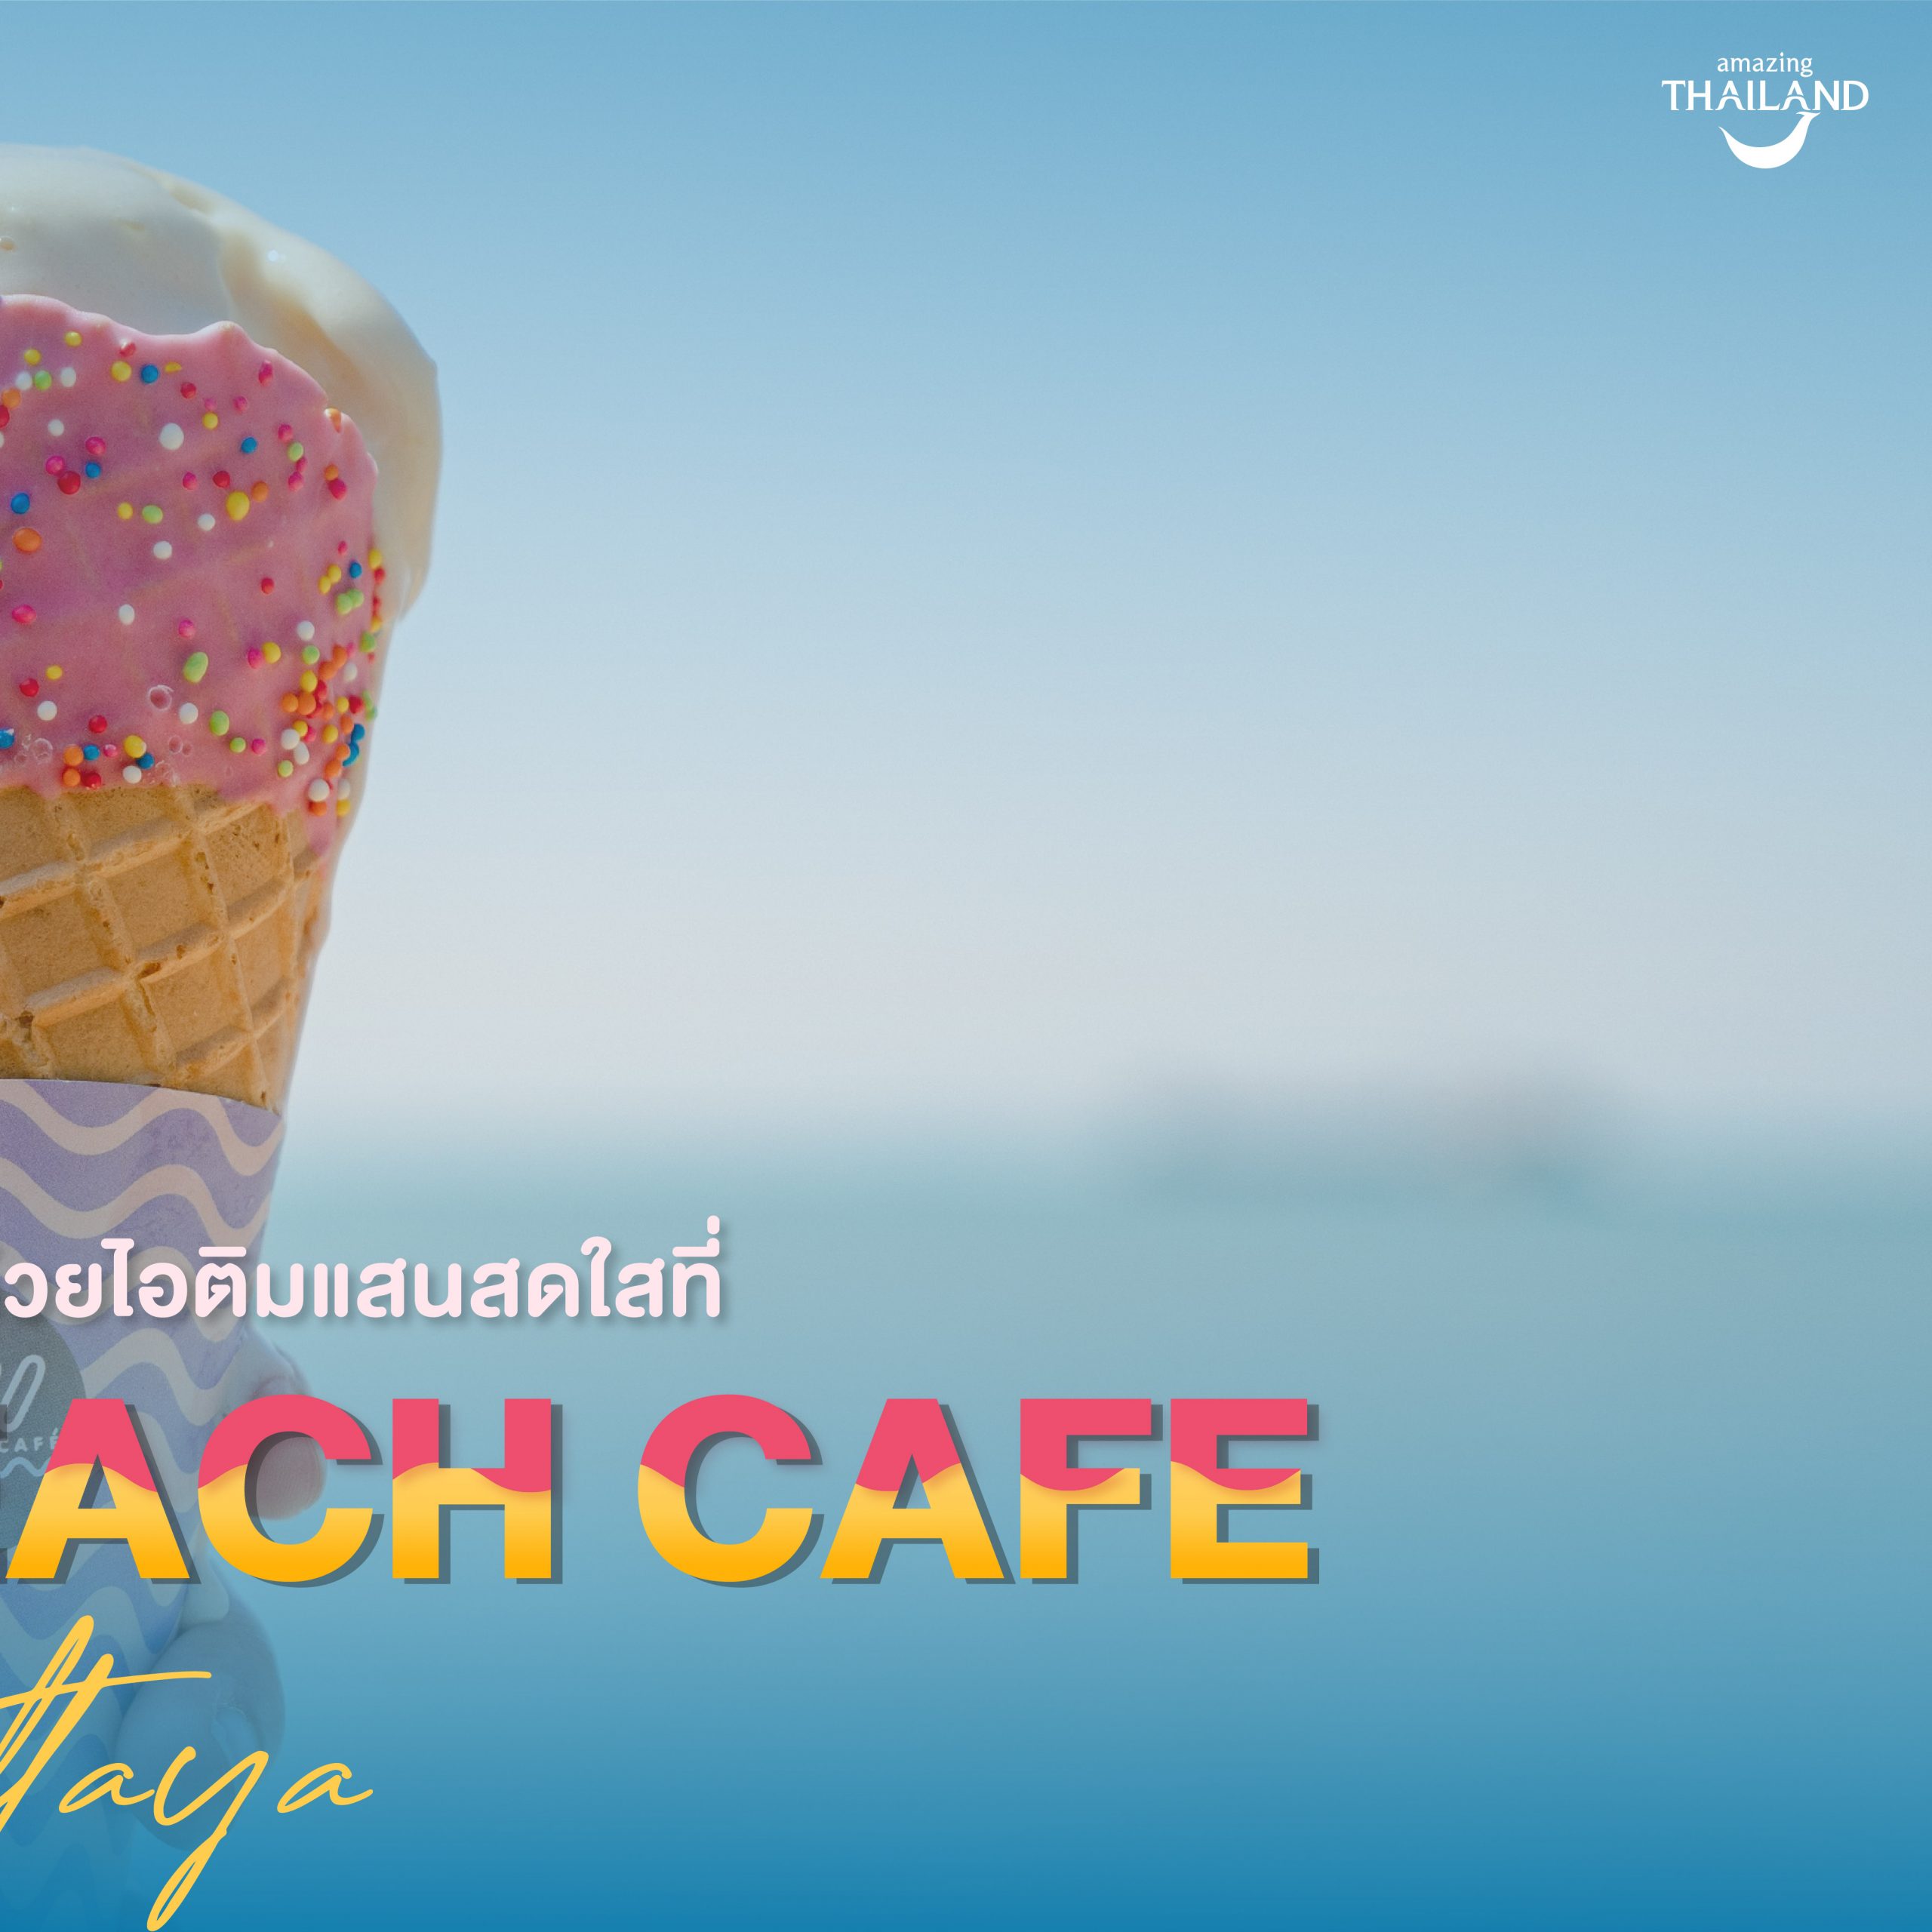 #ChonChecklist ชวนเด็ก ๆ เช็กอินด้วยไอติมแสนสดใสที่ ‘Skoop Beach Cafe Pattaya’